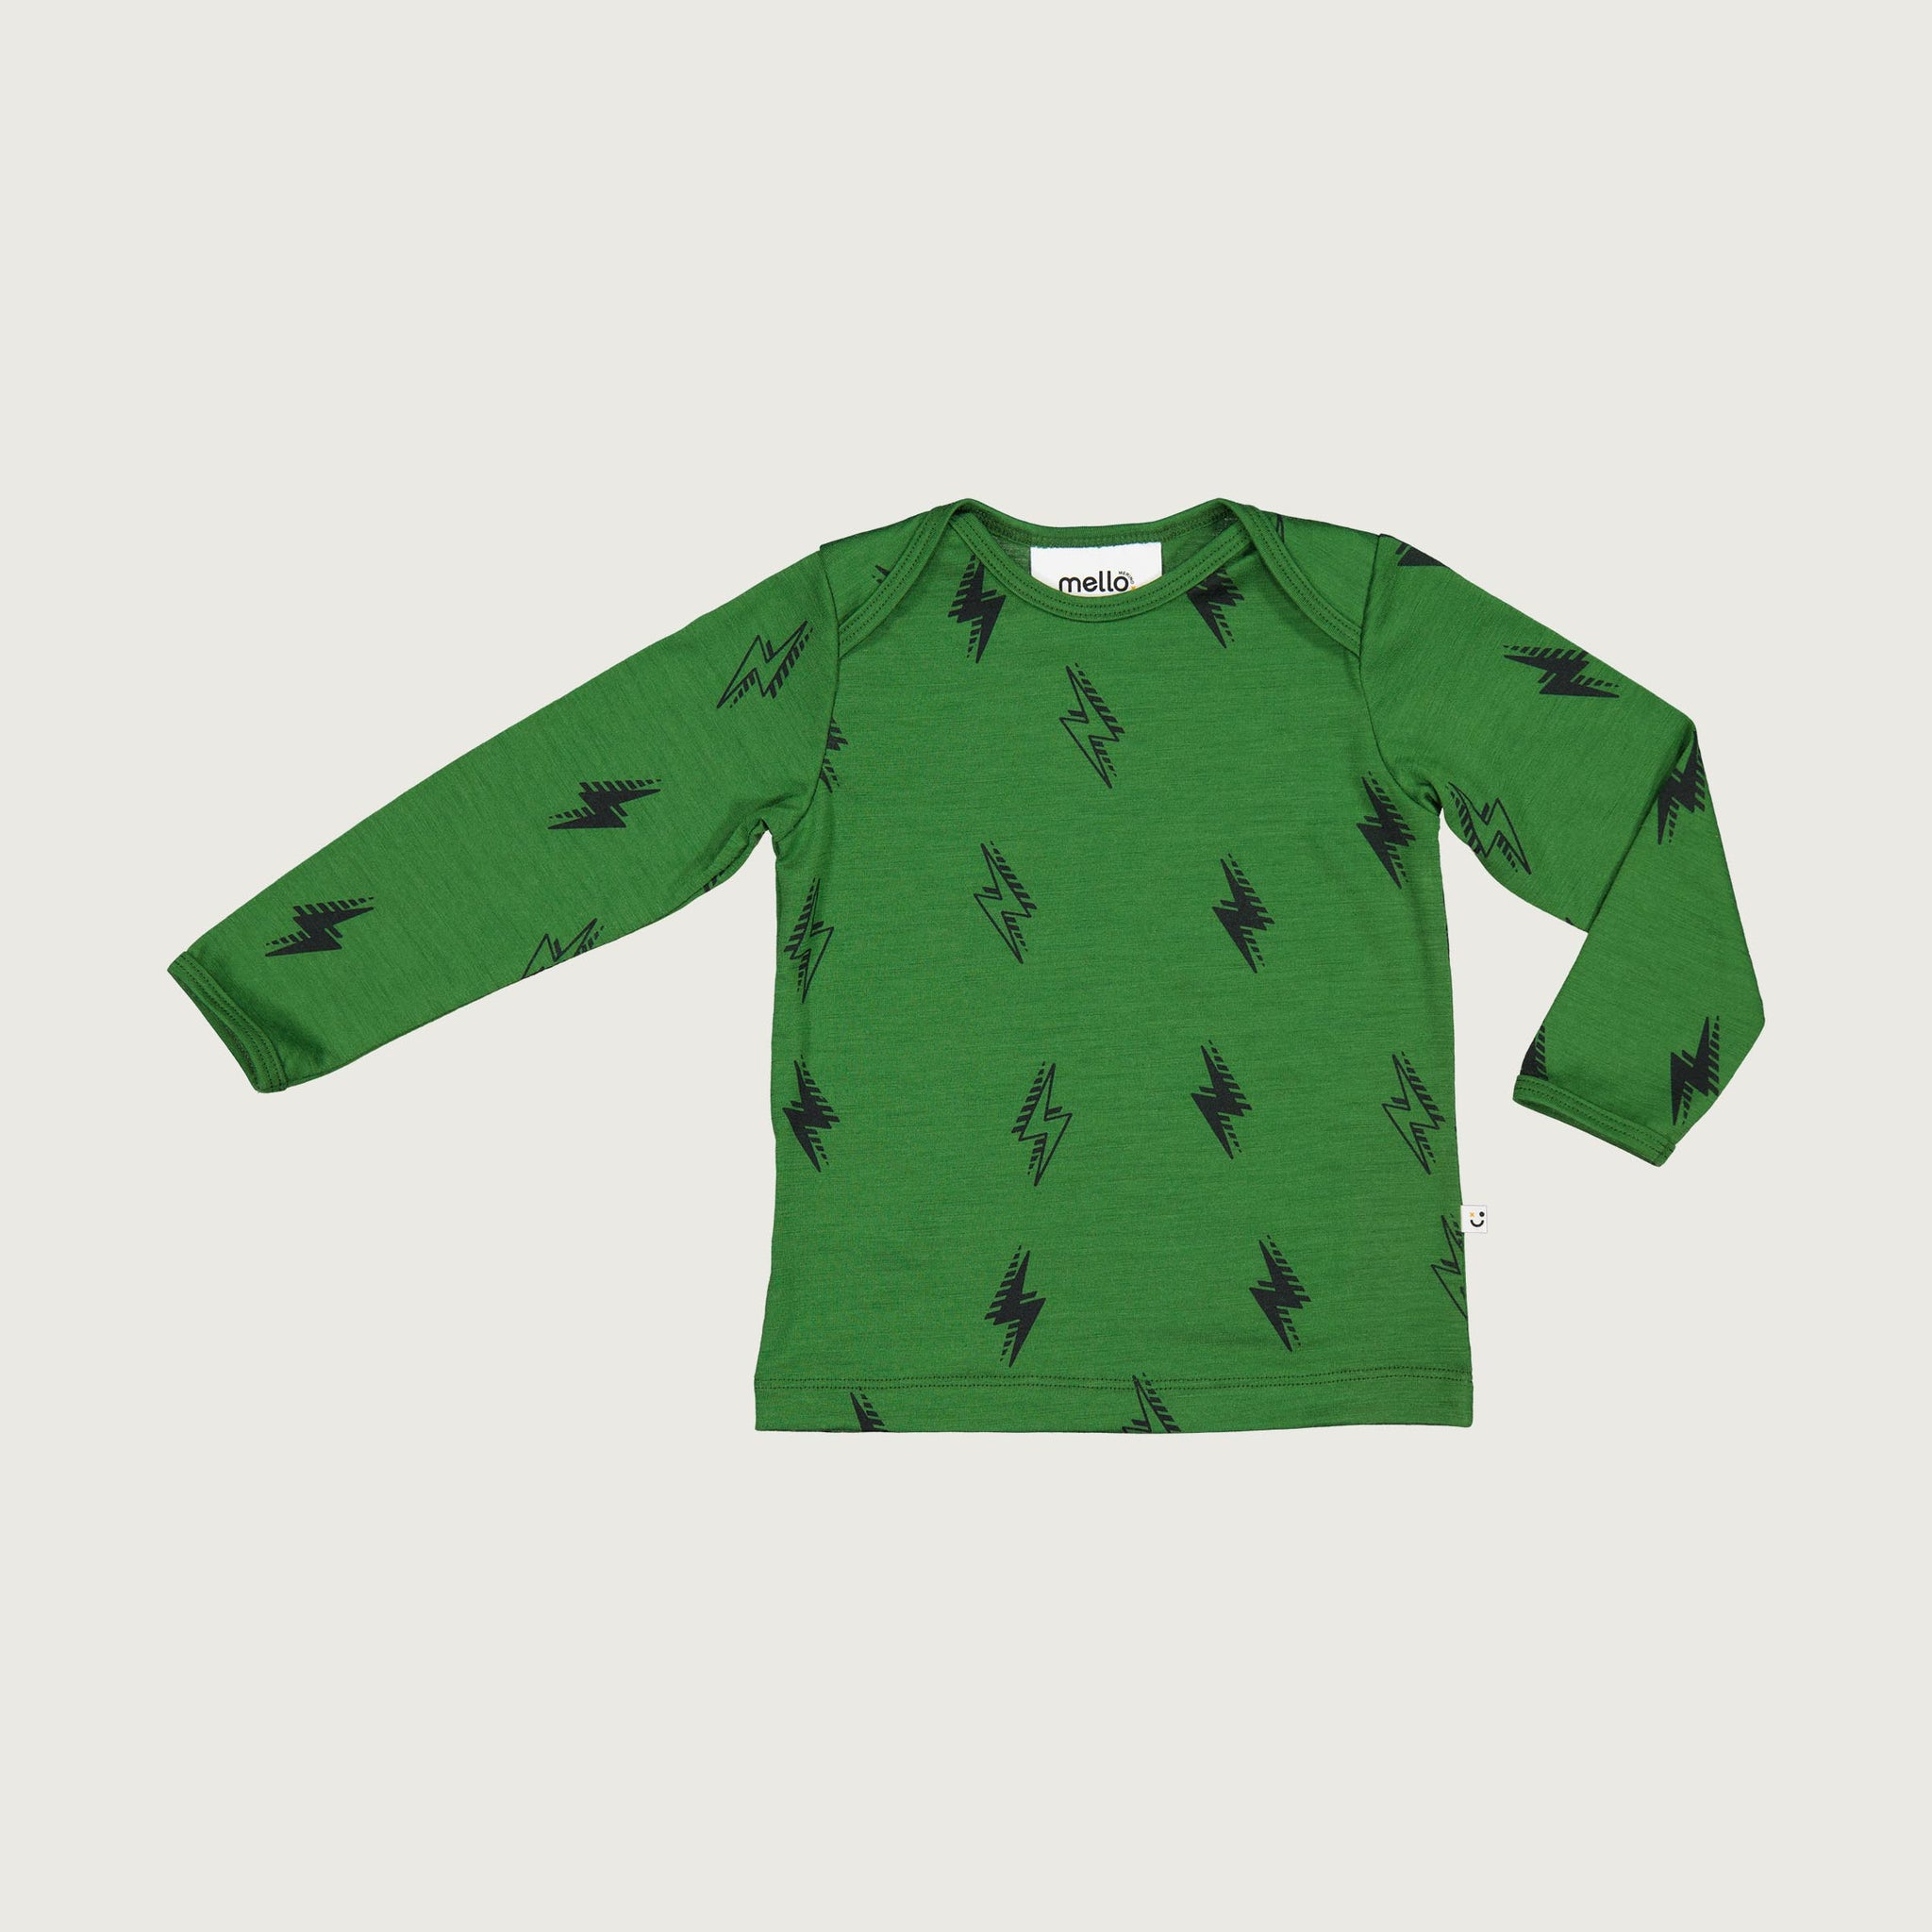 Merino baby long sleeve top moss green with print